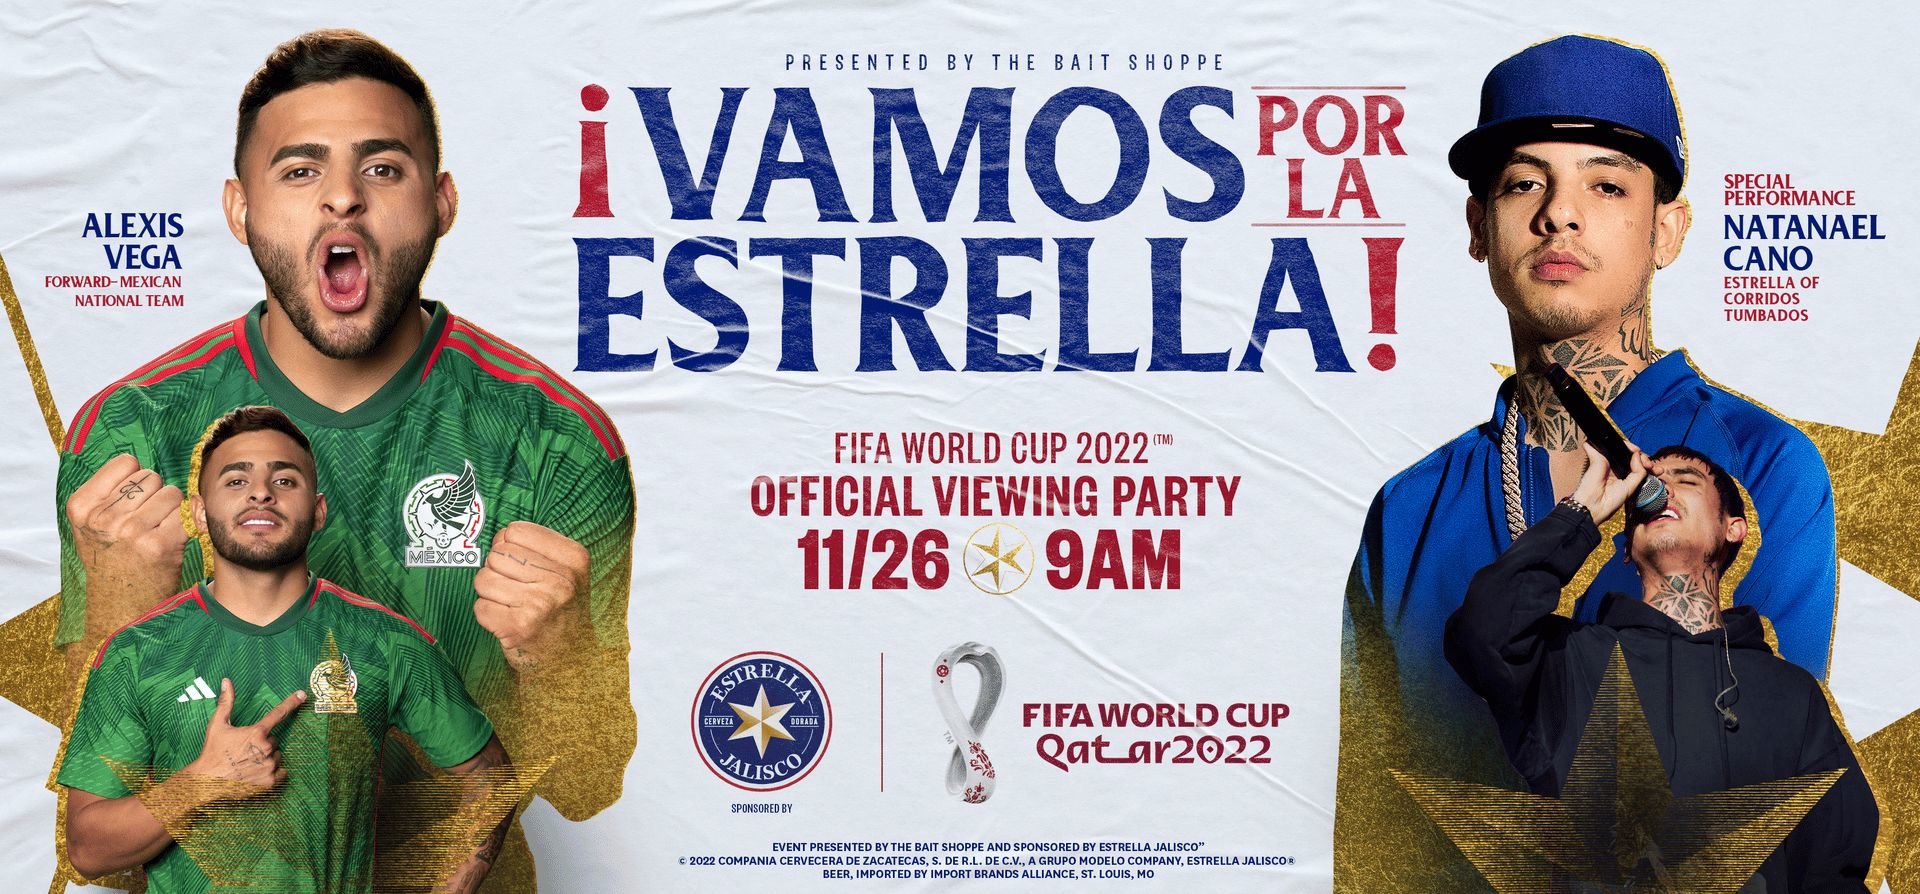 Estrella Jalisco celebrates Mexico’s Pursuit of an “Estrella” alongside World Cup fans nationwide